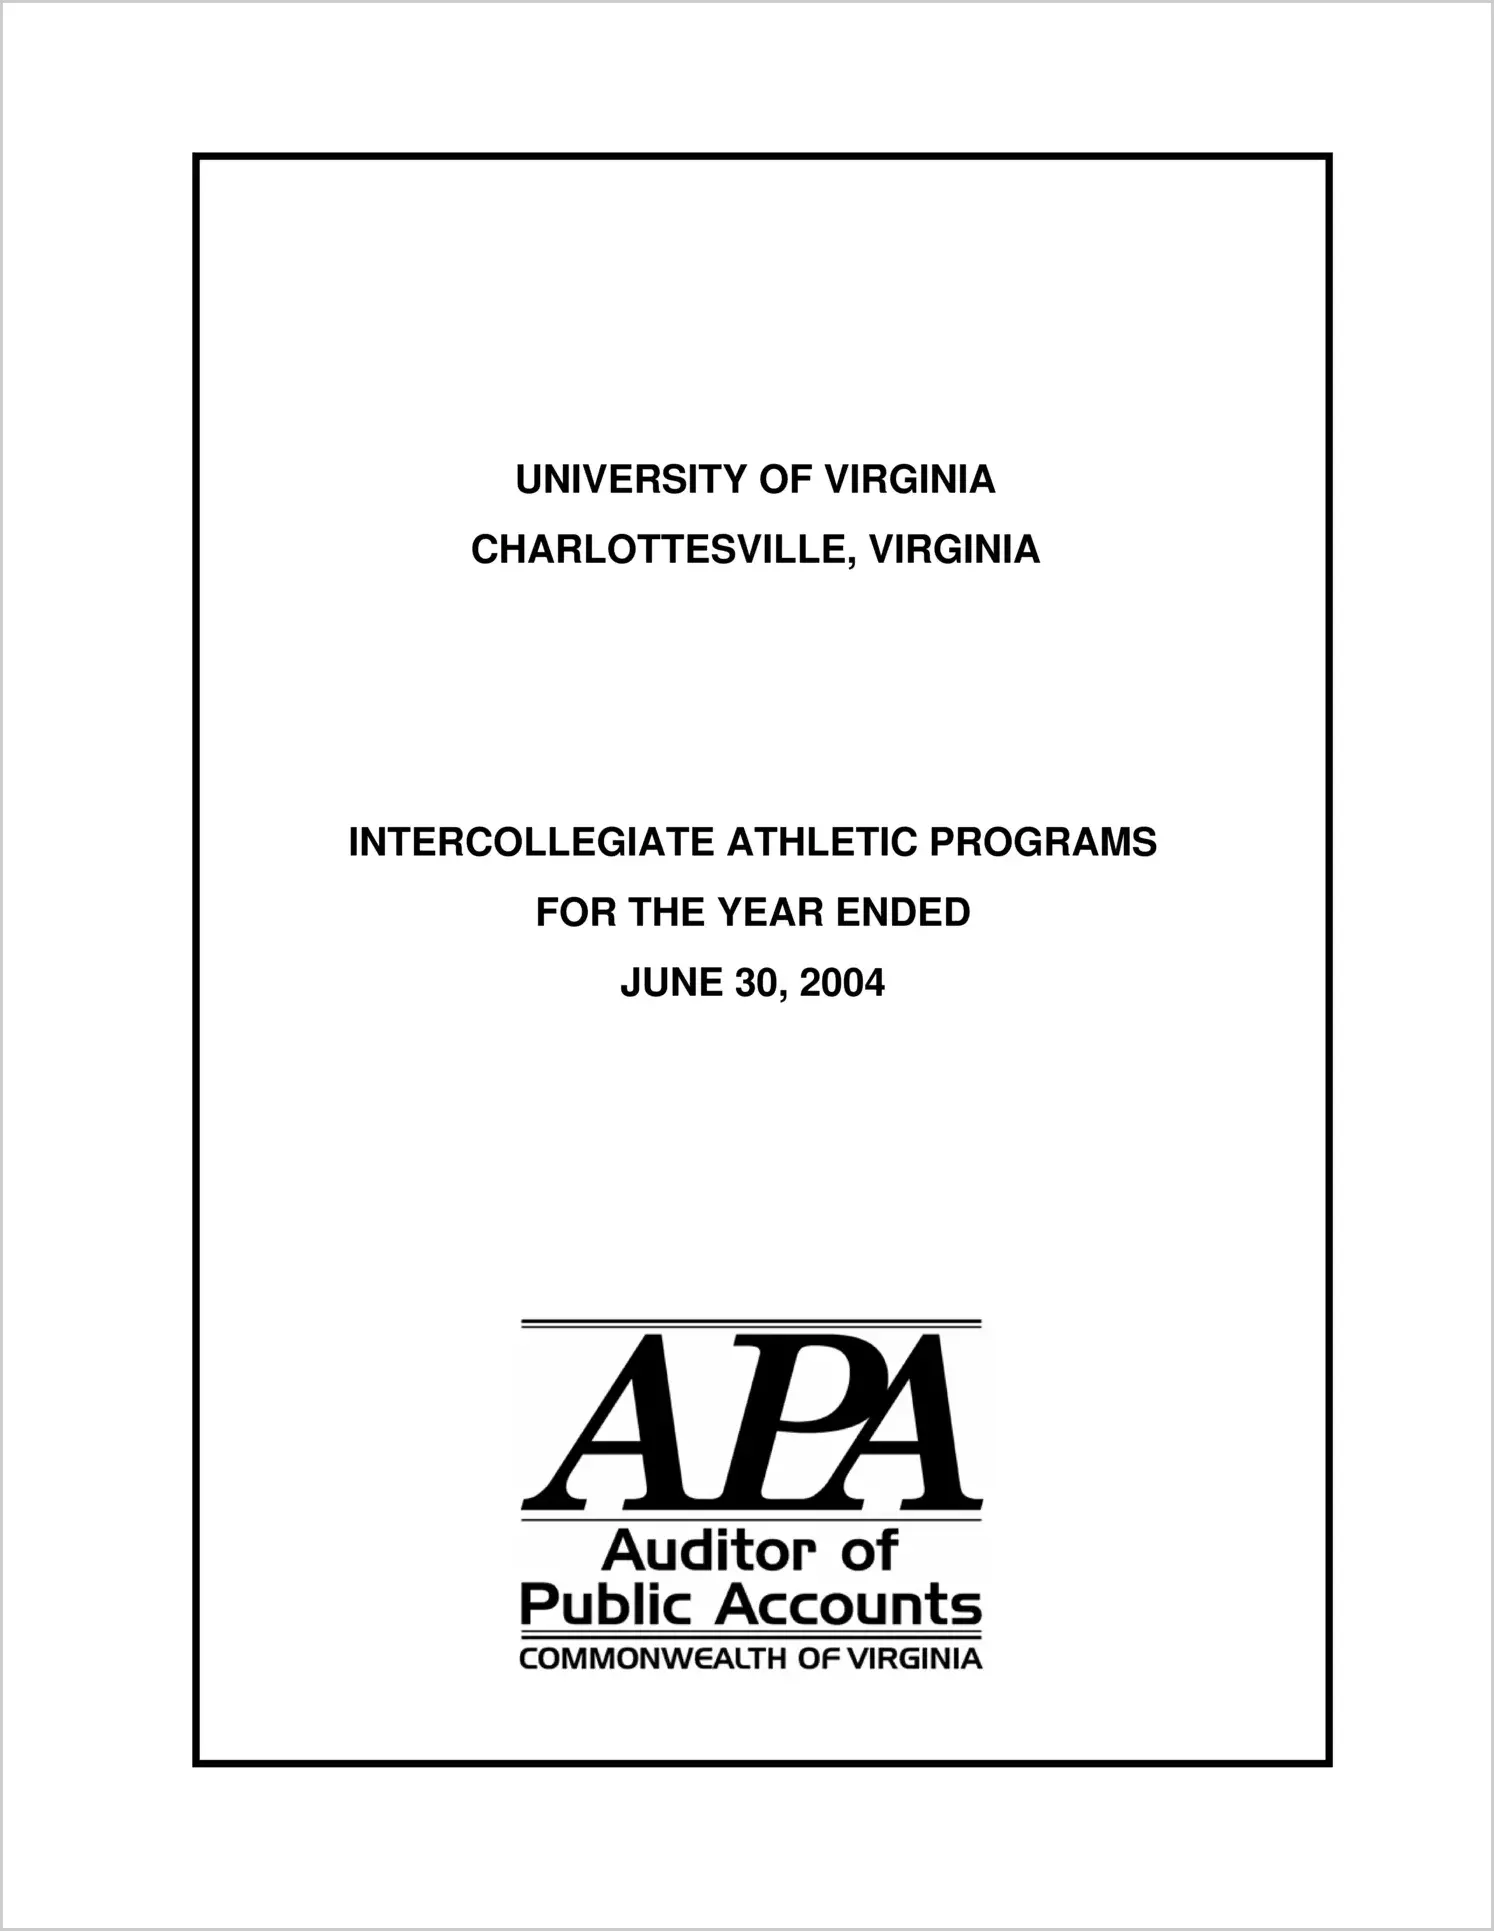 University of Virginia Intercollegiate Athletics Programs for the year ended June 30, 2004